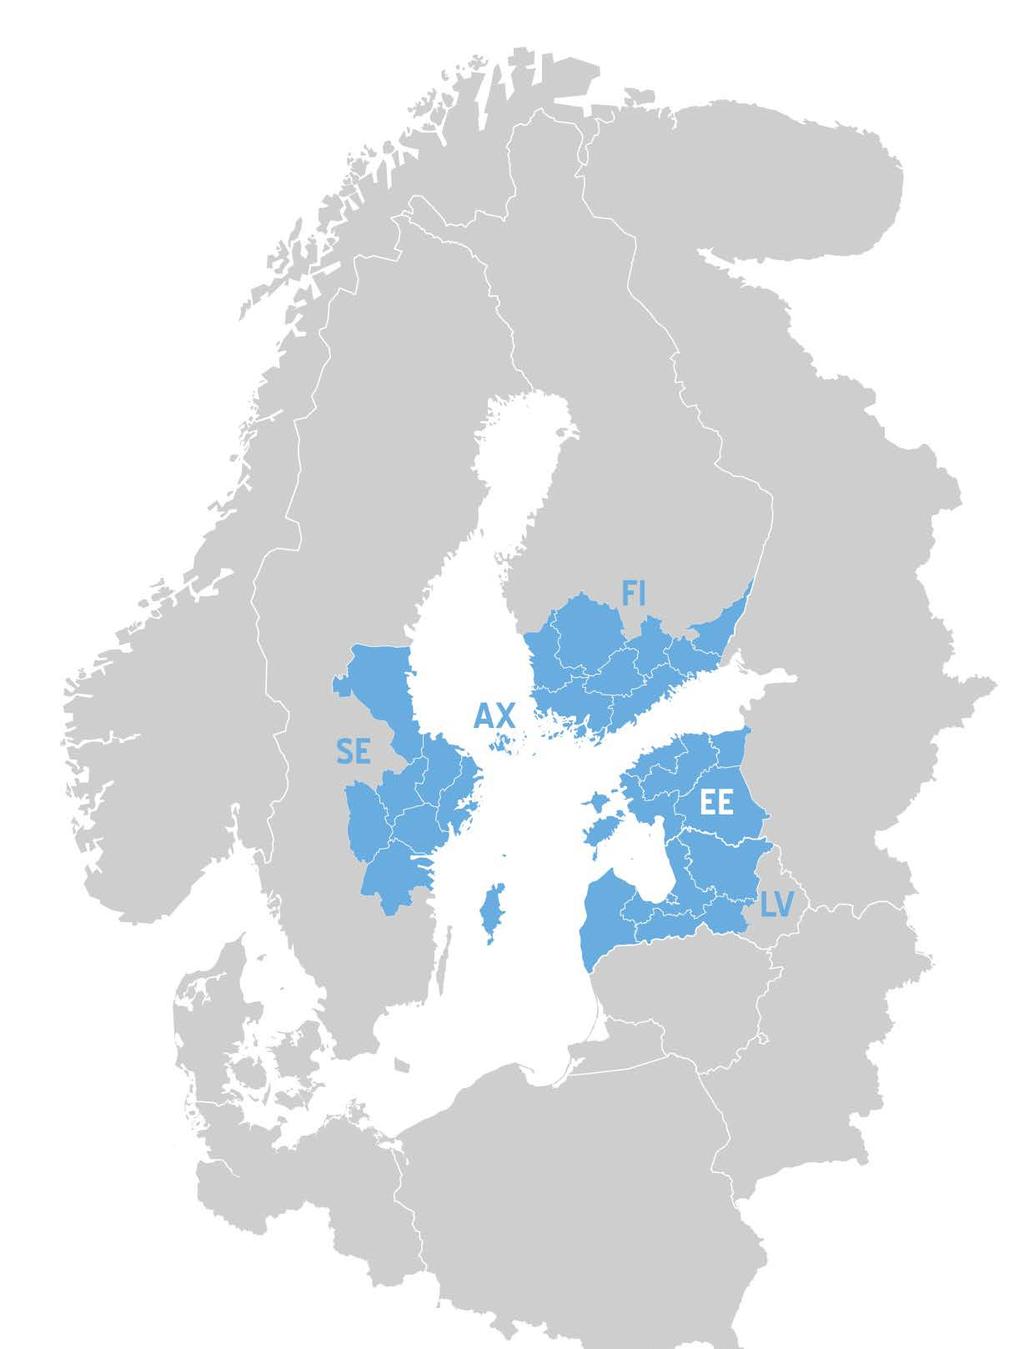 The Central Baltic Programme 115 million euros ERDF Co-finacing rates (max): 75% (Finland & Sweden)